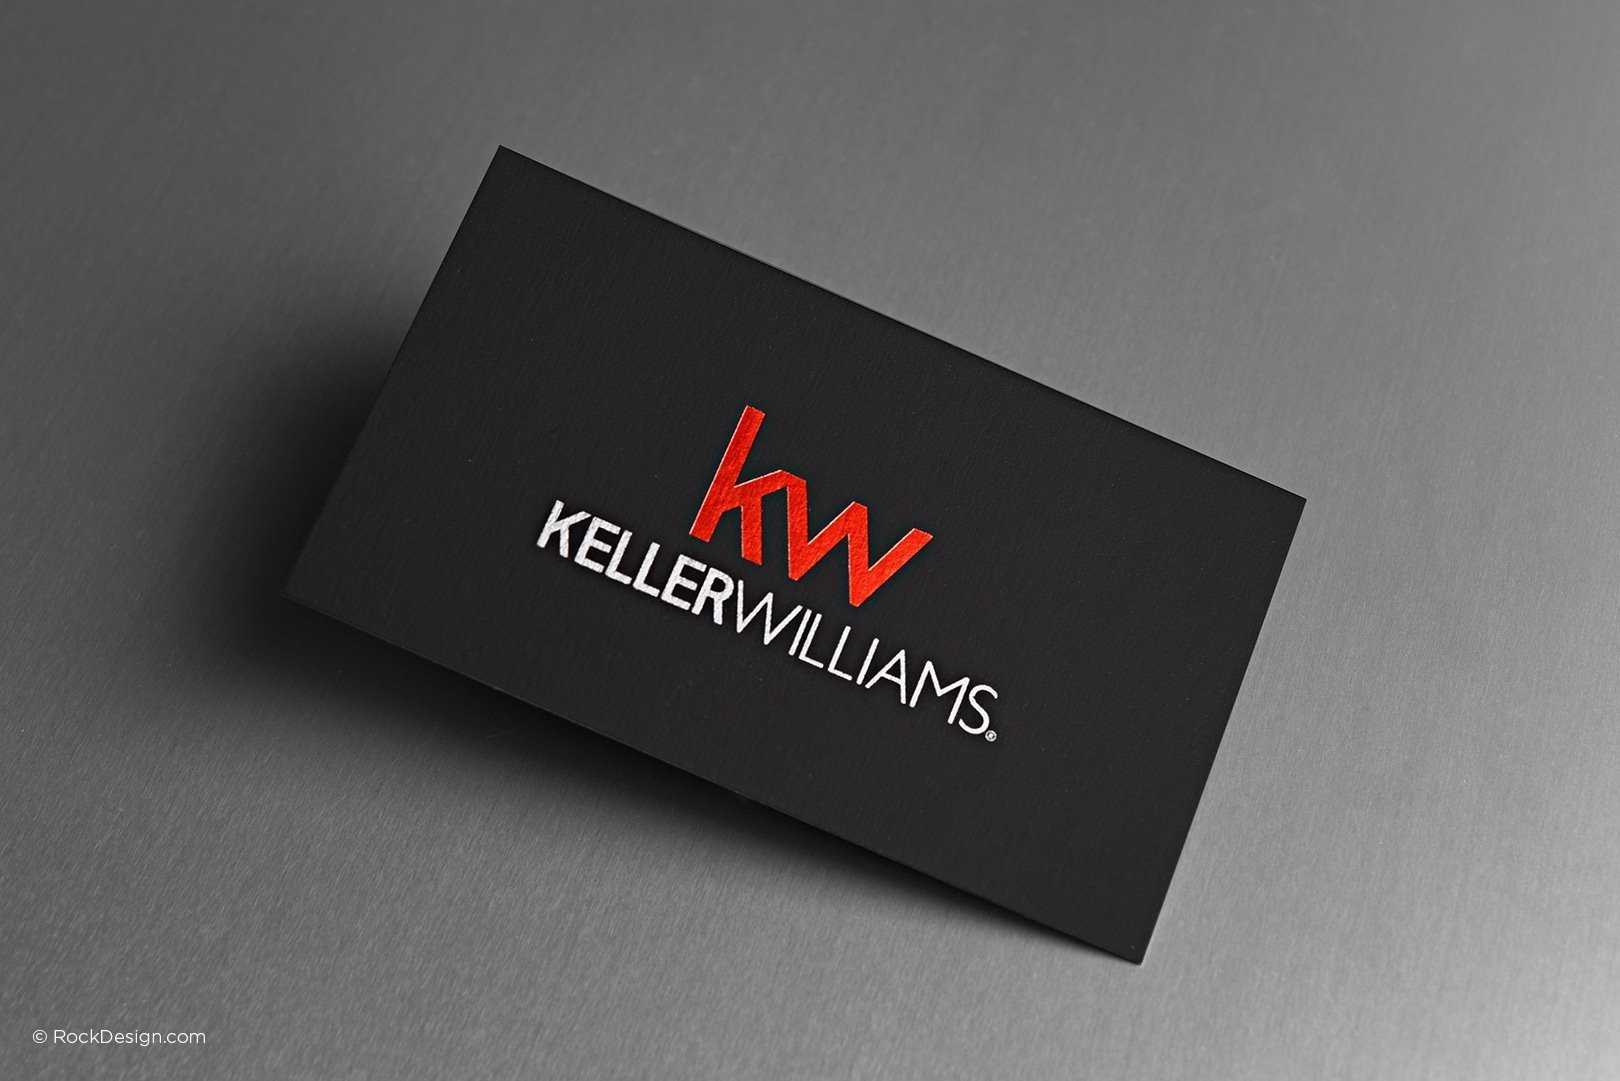 Free Keller Williams Business Card Template With Print Within Keller Williams Business Card Templates